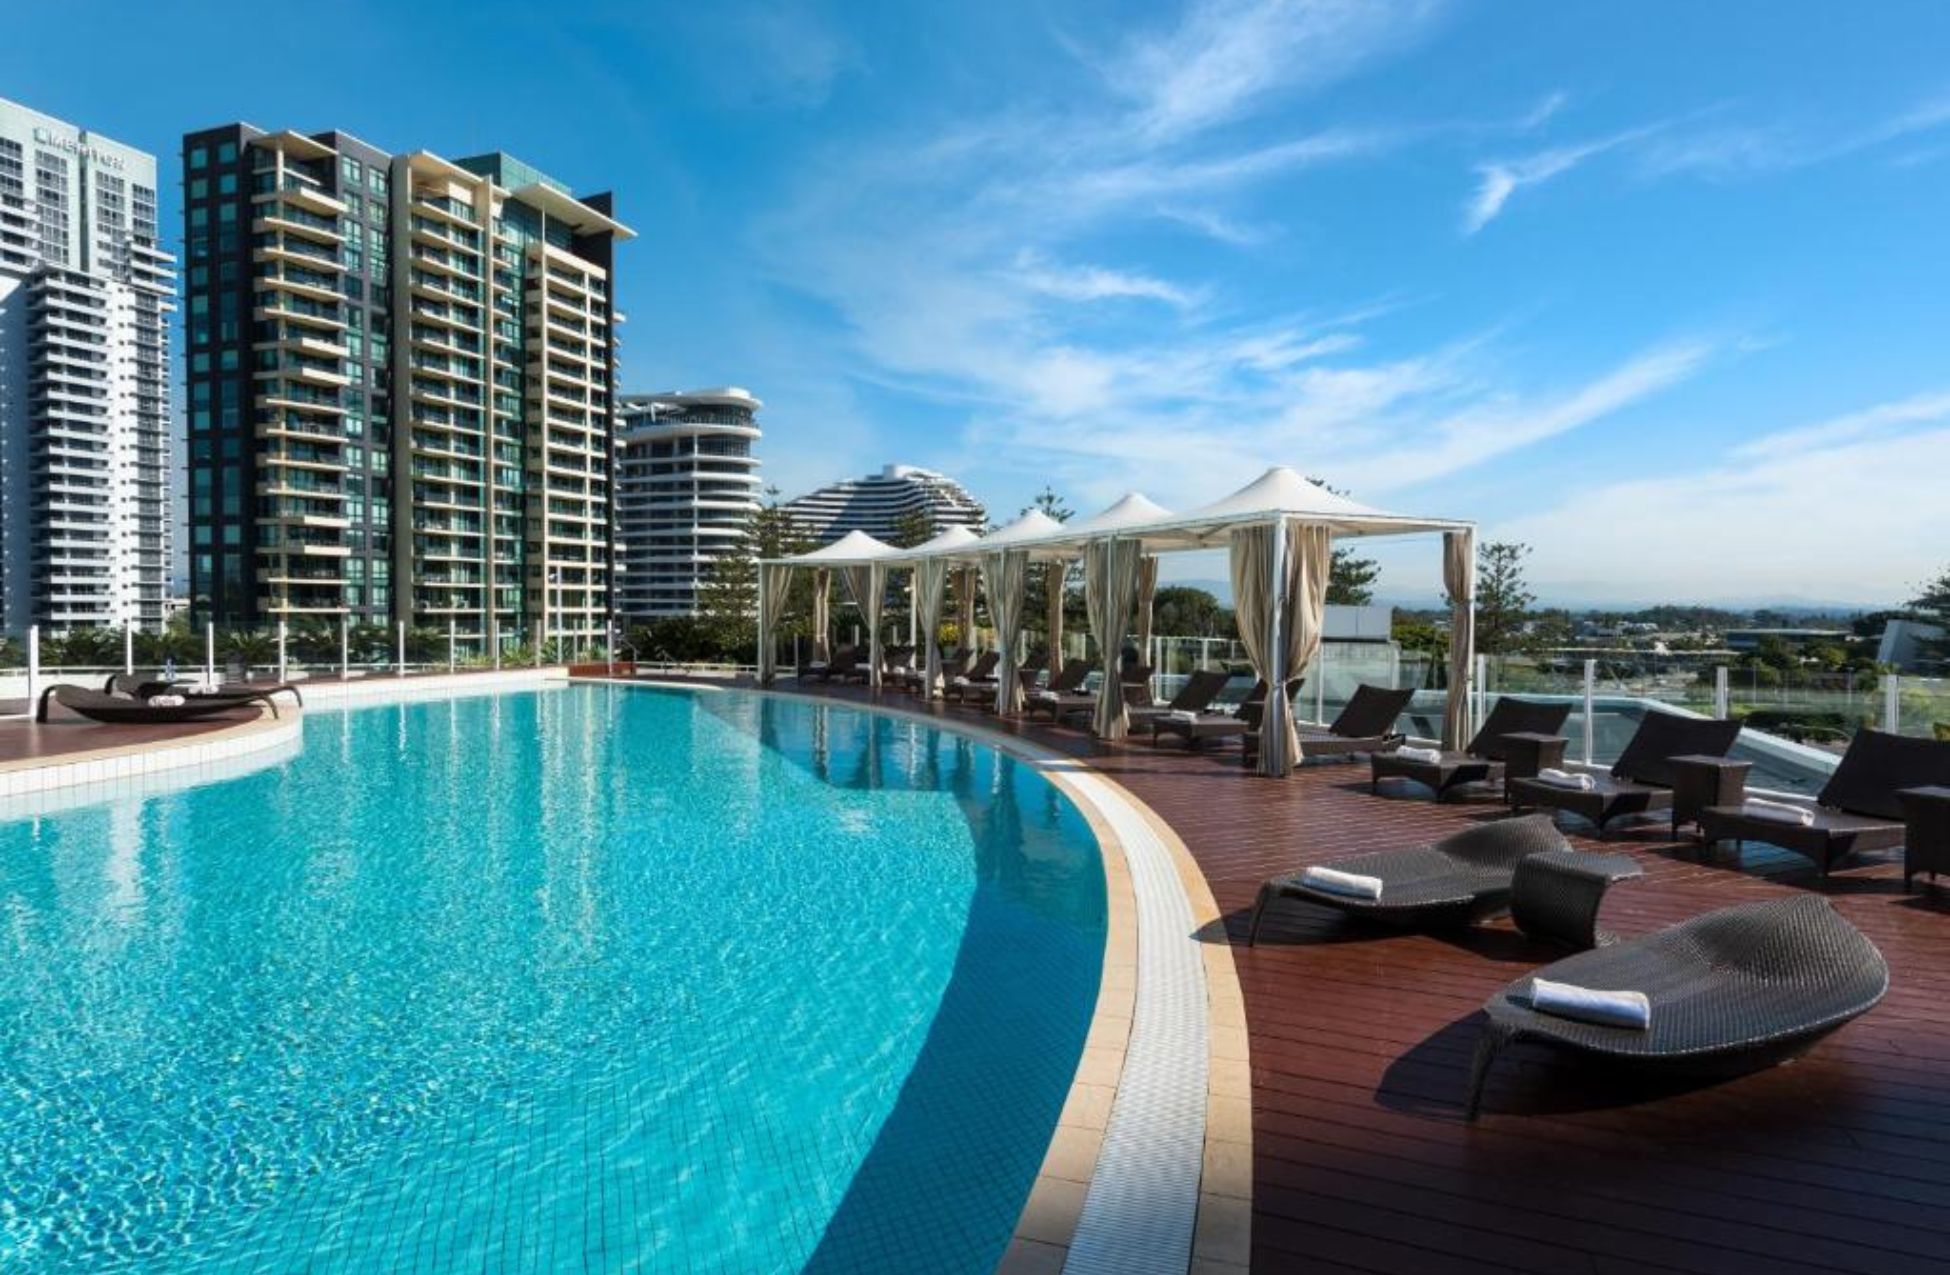 Sofitel Gold Coast Broadbeach - Best Hotels In Gold Coast